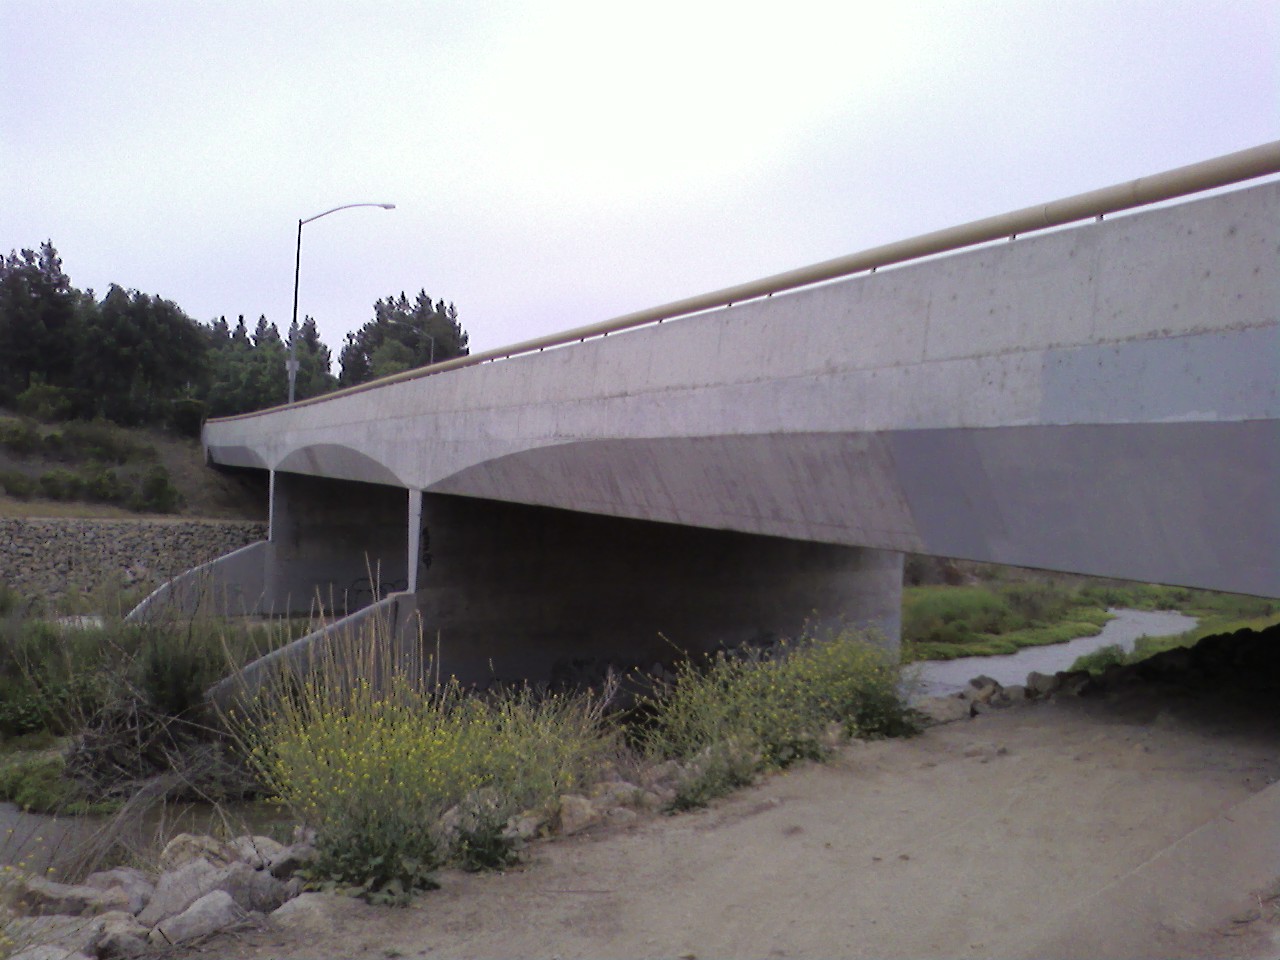 an overpass bridge with a stream running underneath it